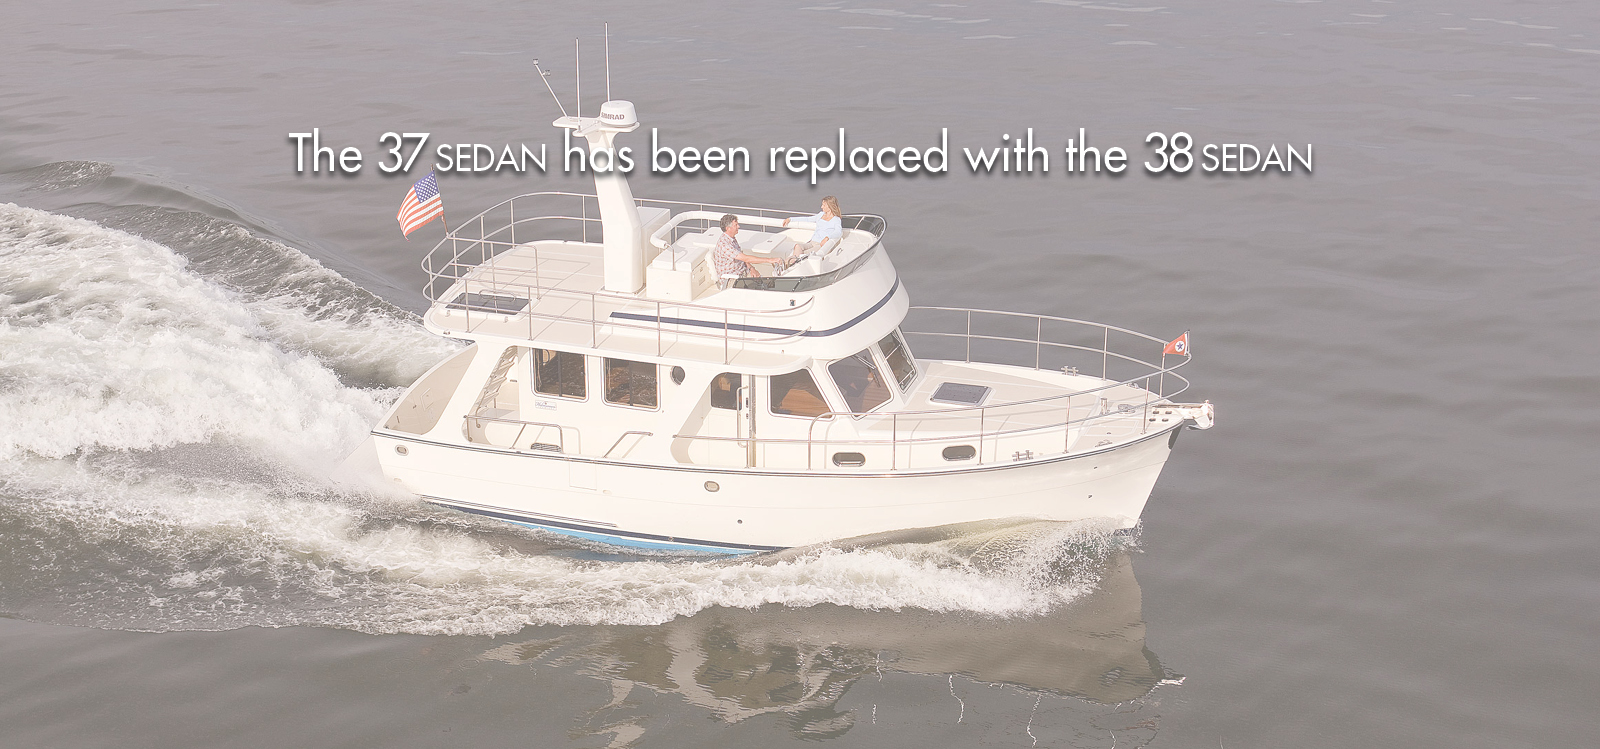 Helmsman Trawlers 37 Sedan replace with the 38 Sedan